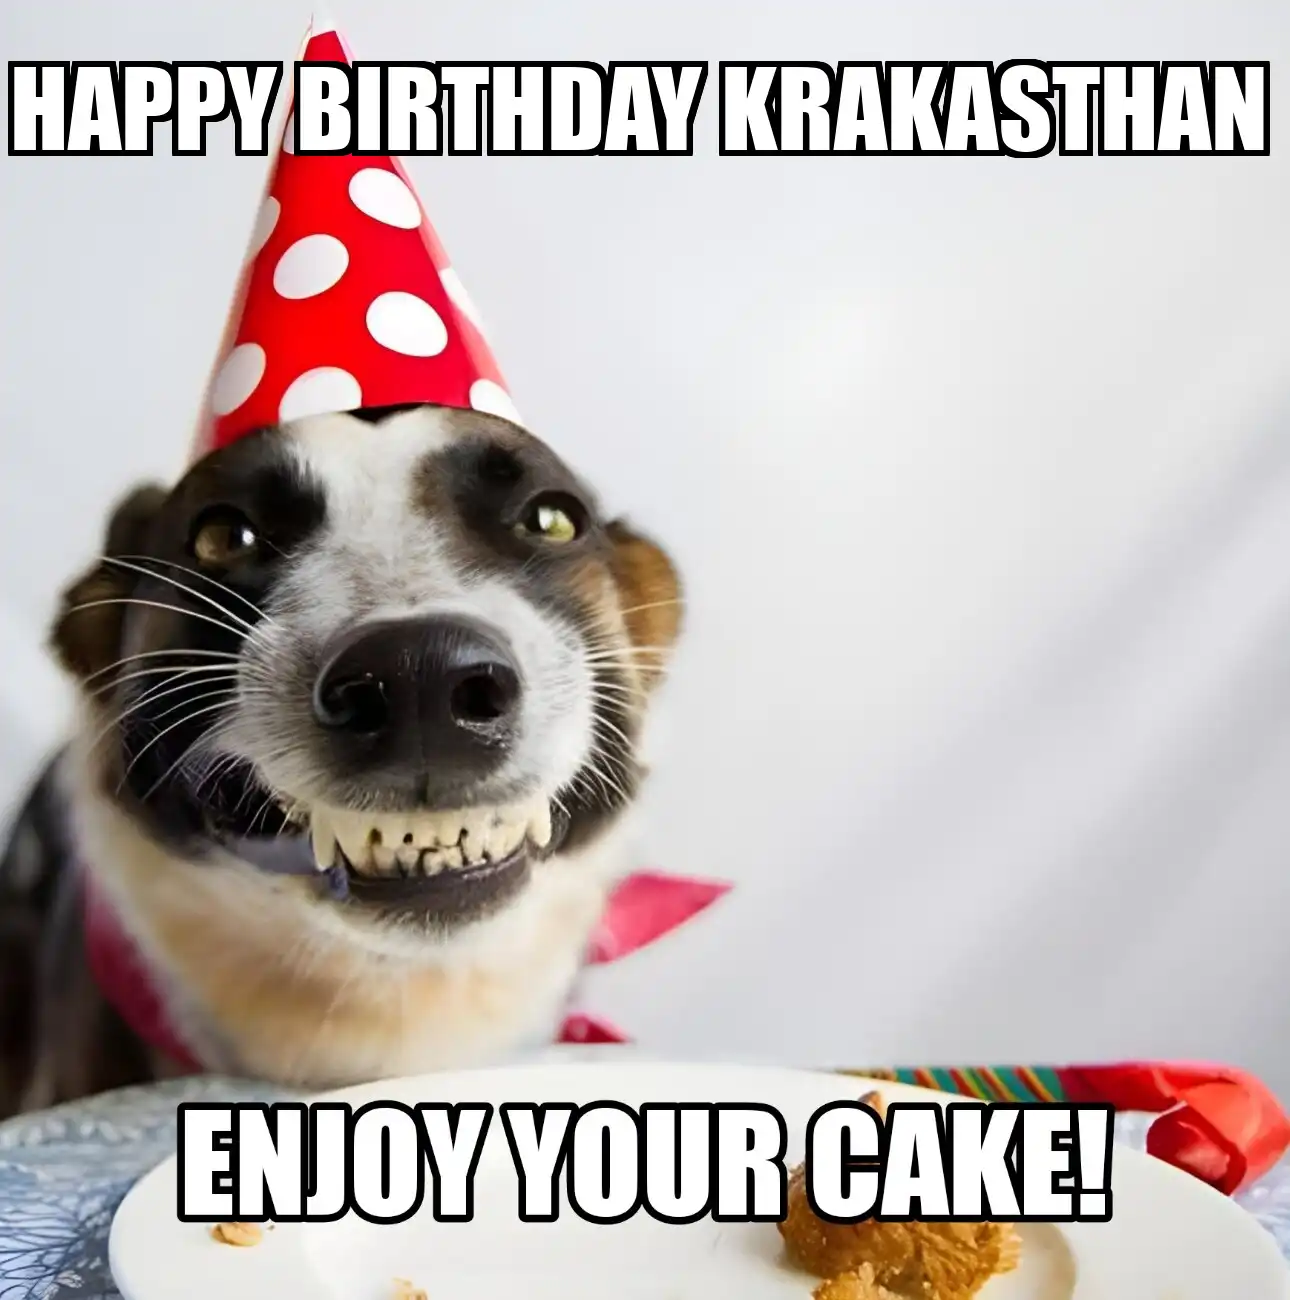 Happy Birthday Krakasthan Enjoy Your Cake Dog Meme